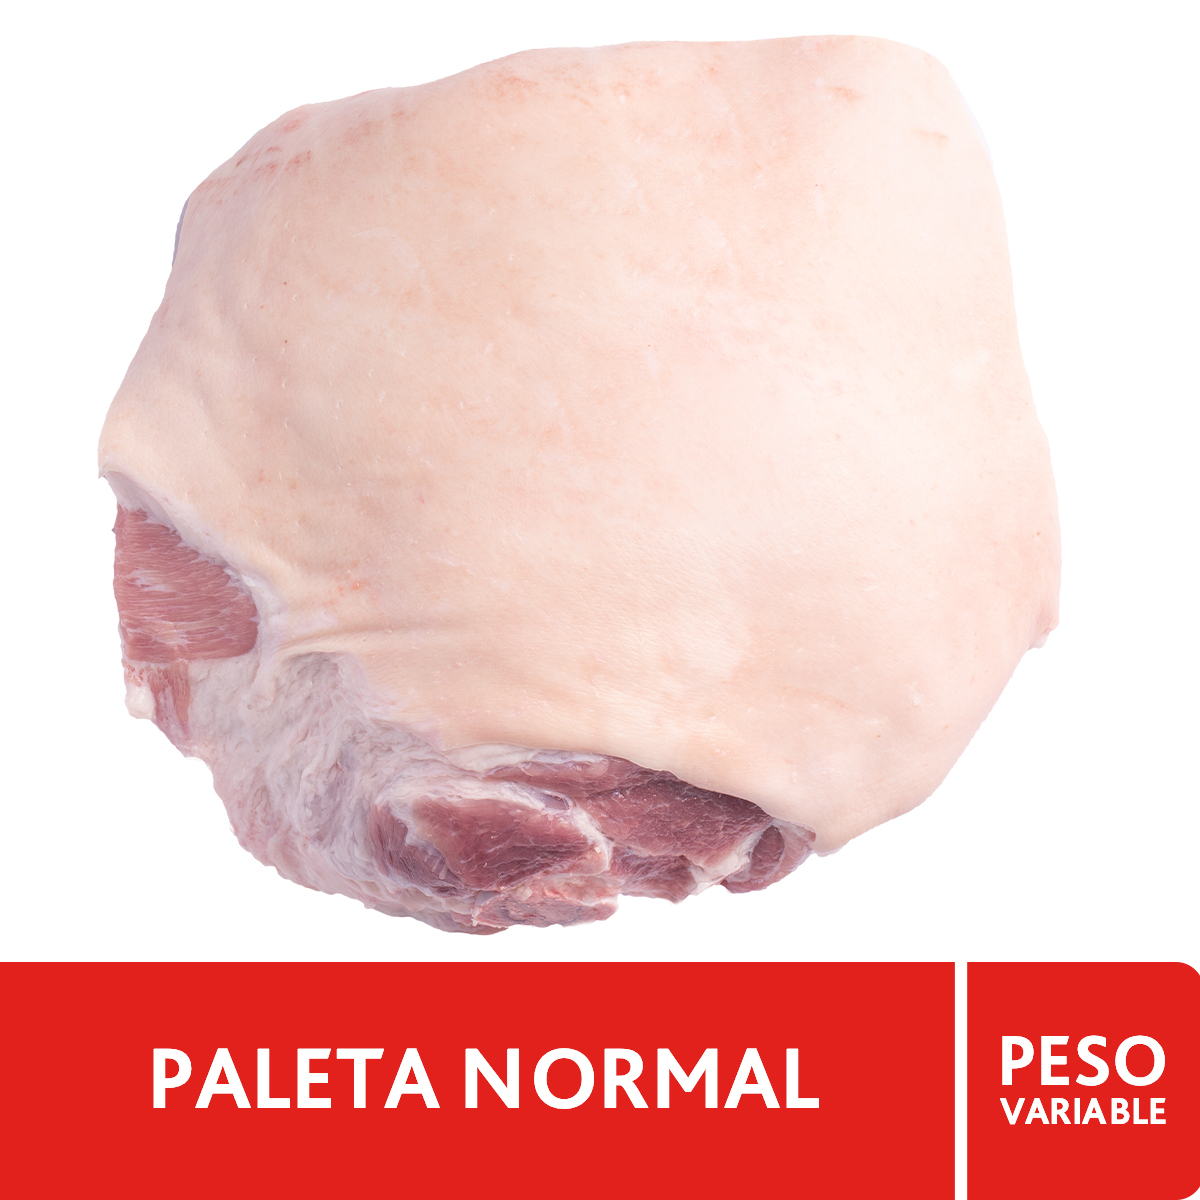 Paleta Normal de Cerdo